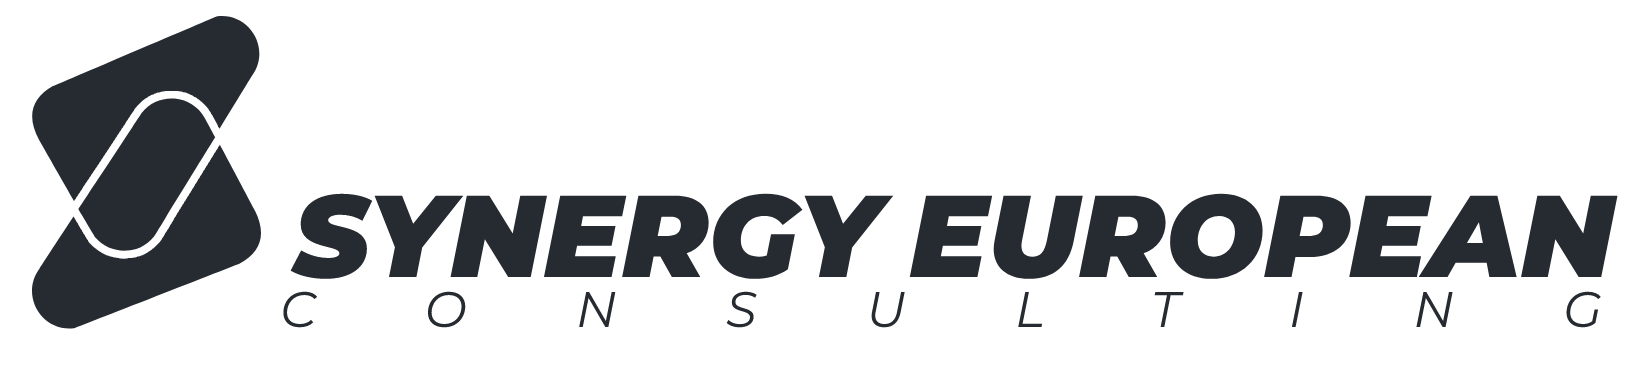 Synergy European